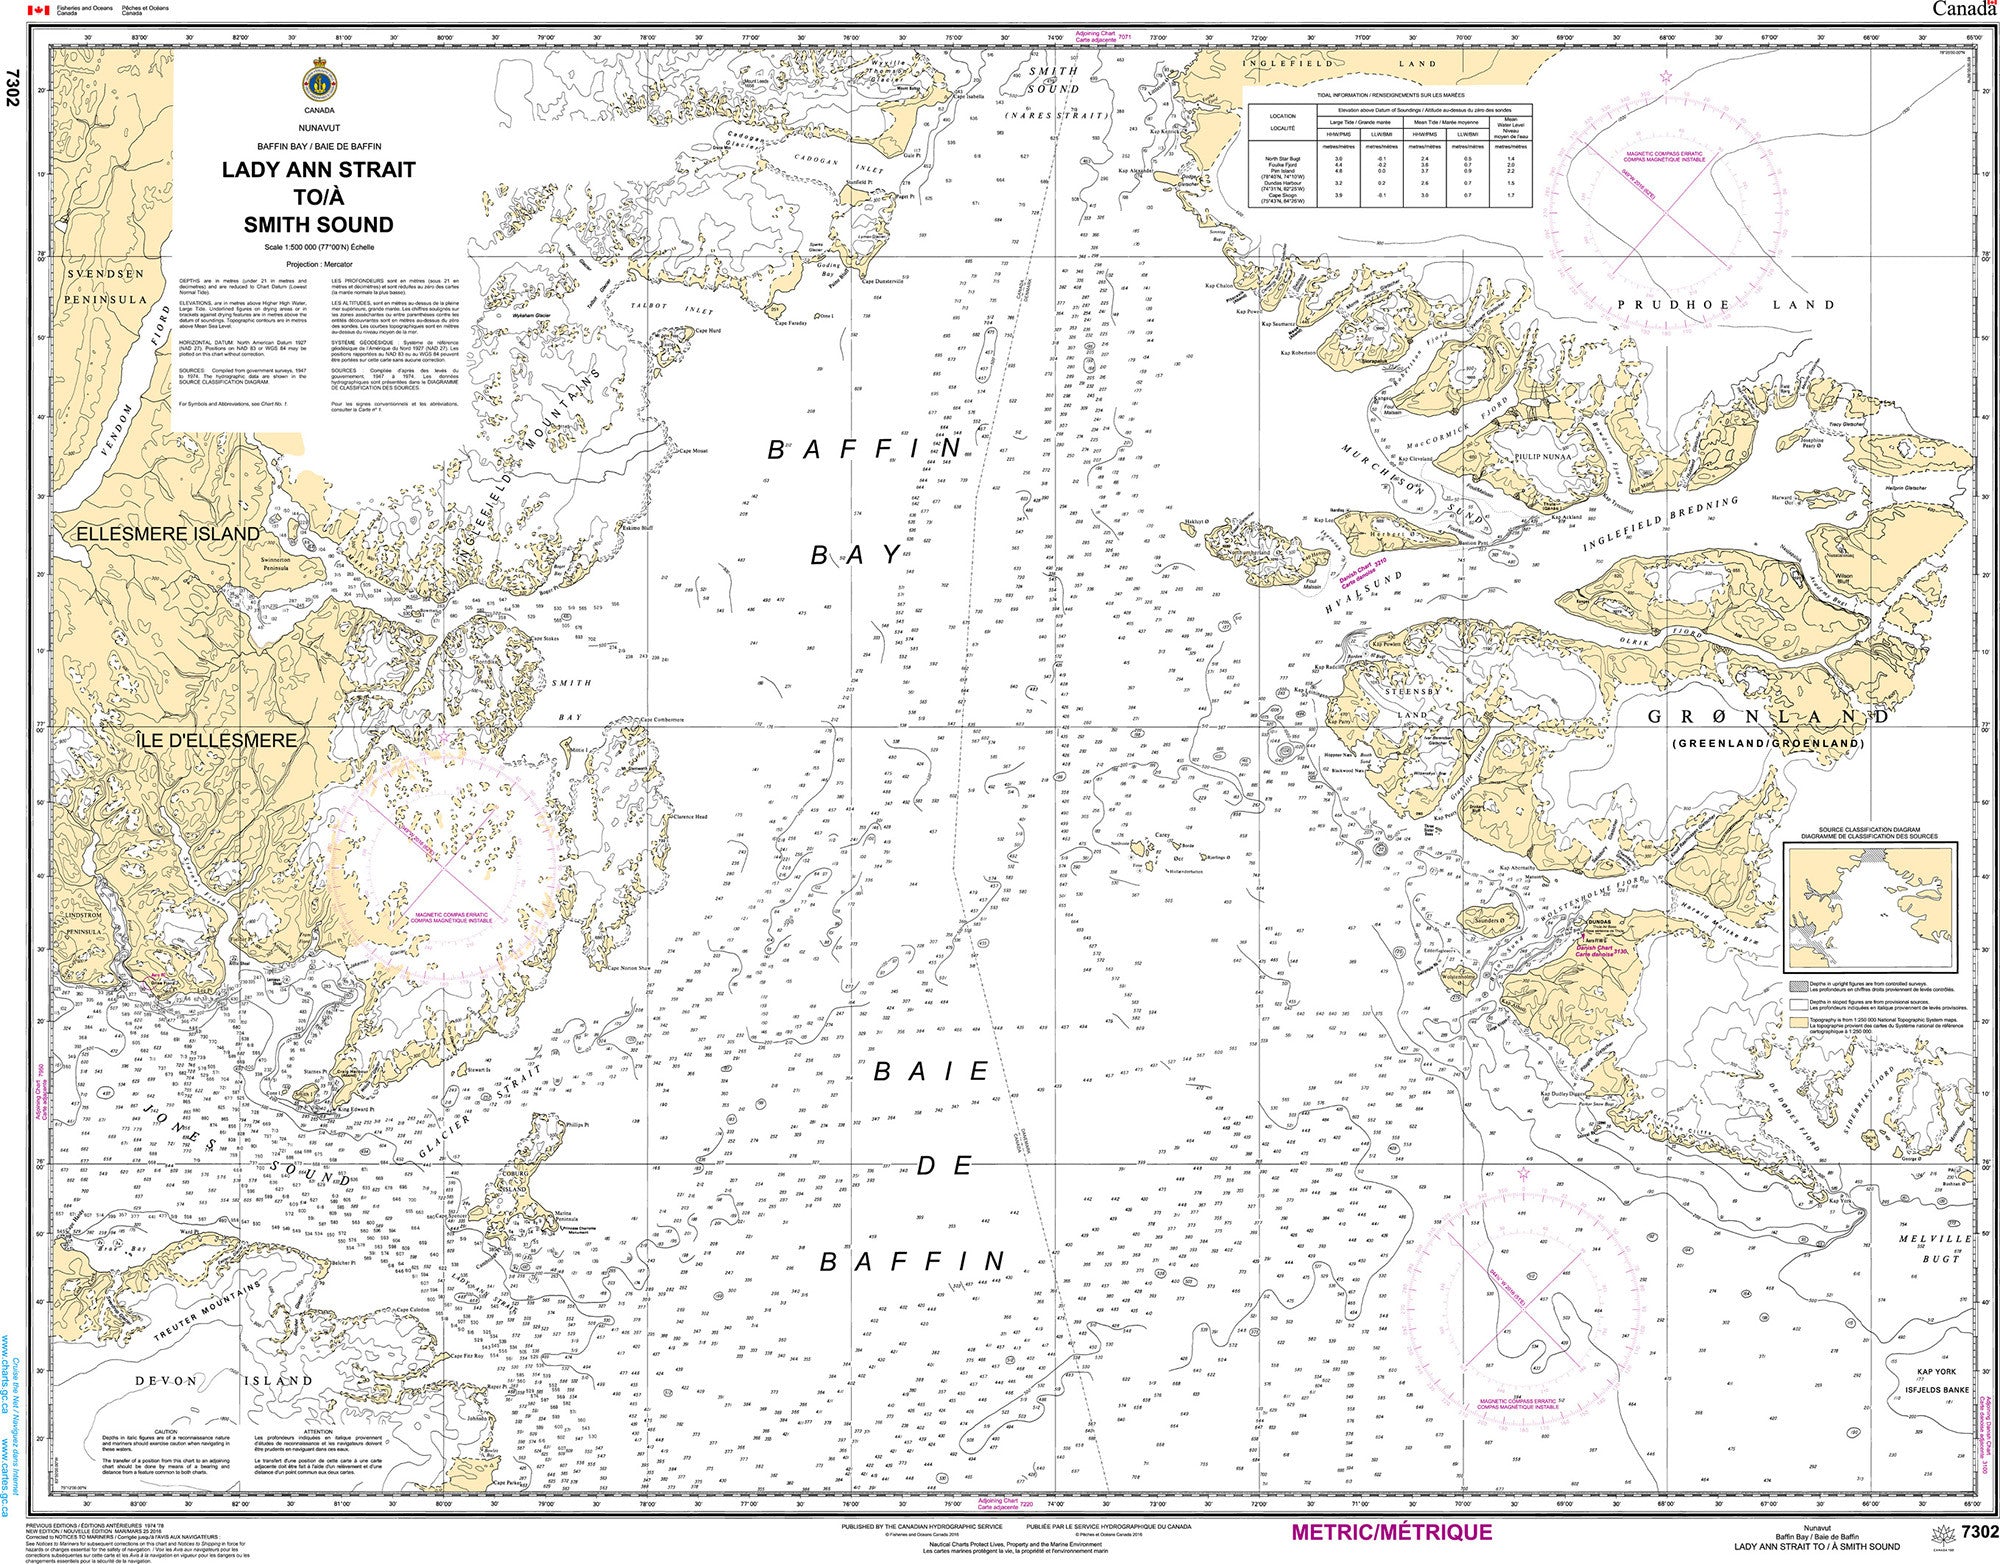 Canadian Hydrographic Service Nautical Chart CHS7302: Lady Ann Strait to Smith Sound